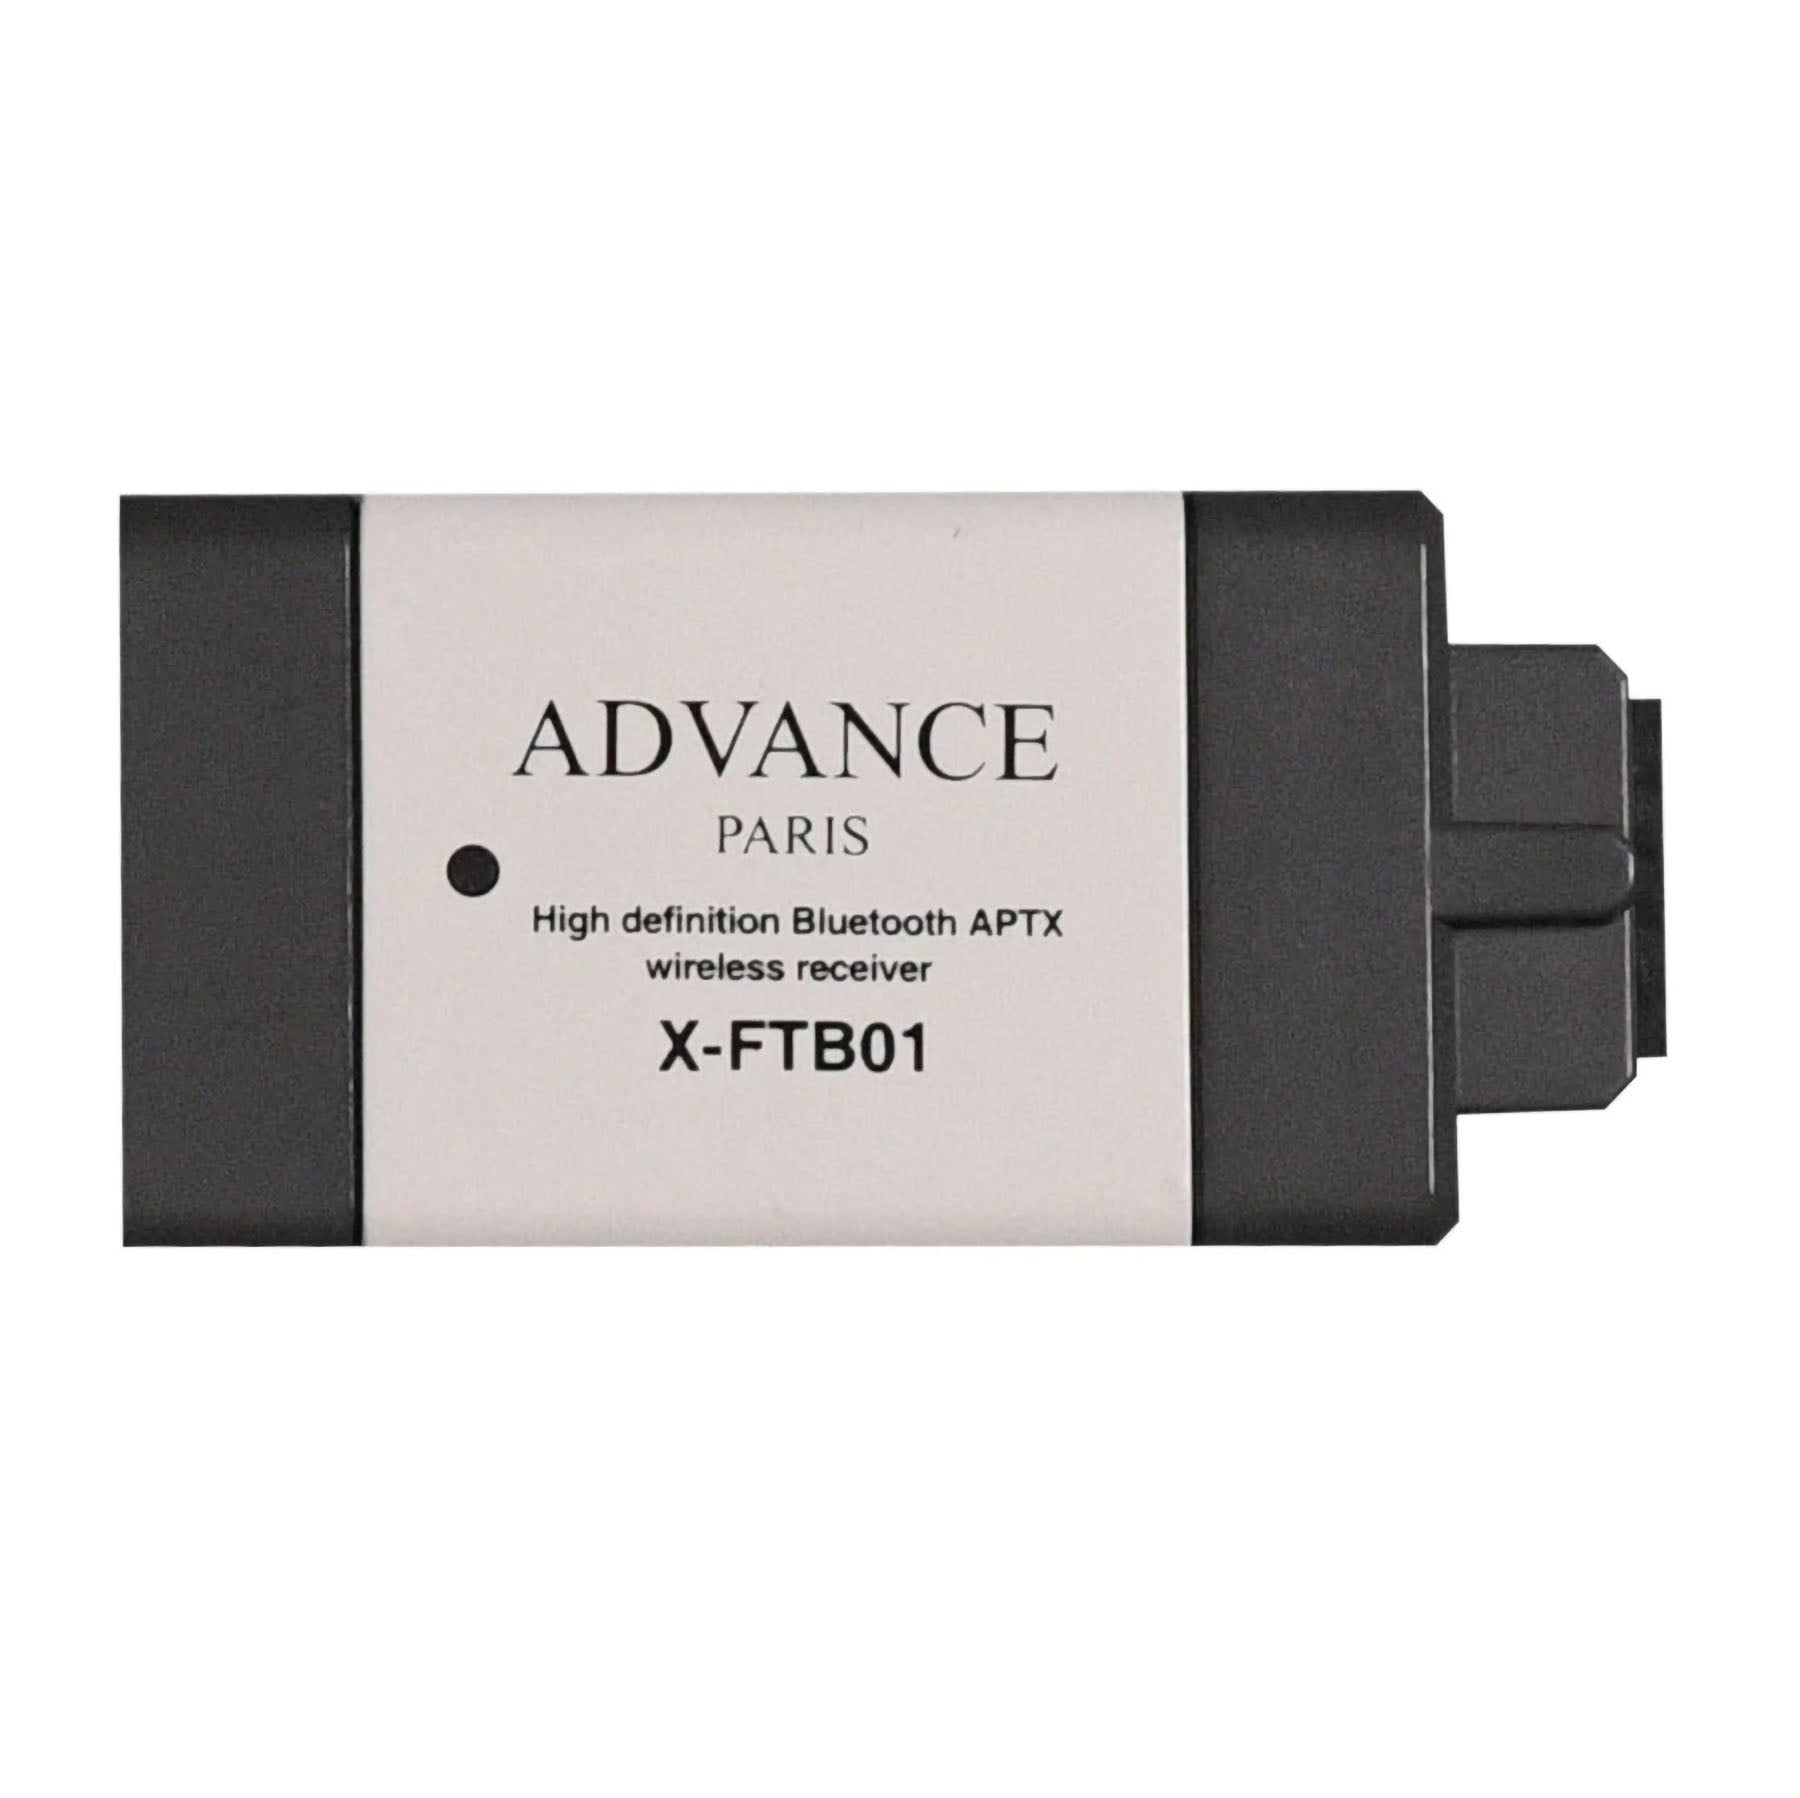 Advance Paris X-FTB01 Proprietary Bluetooth Receiver